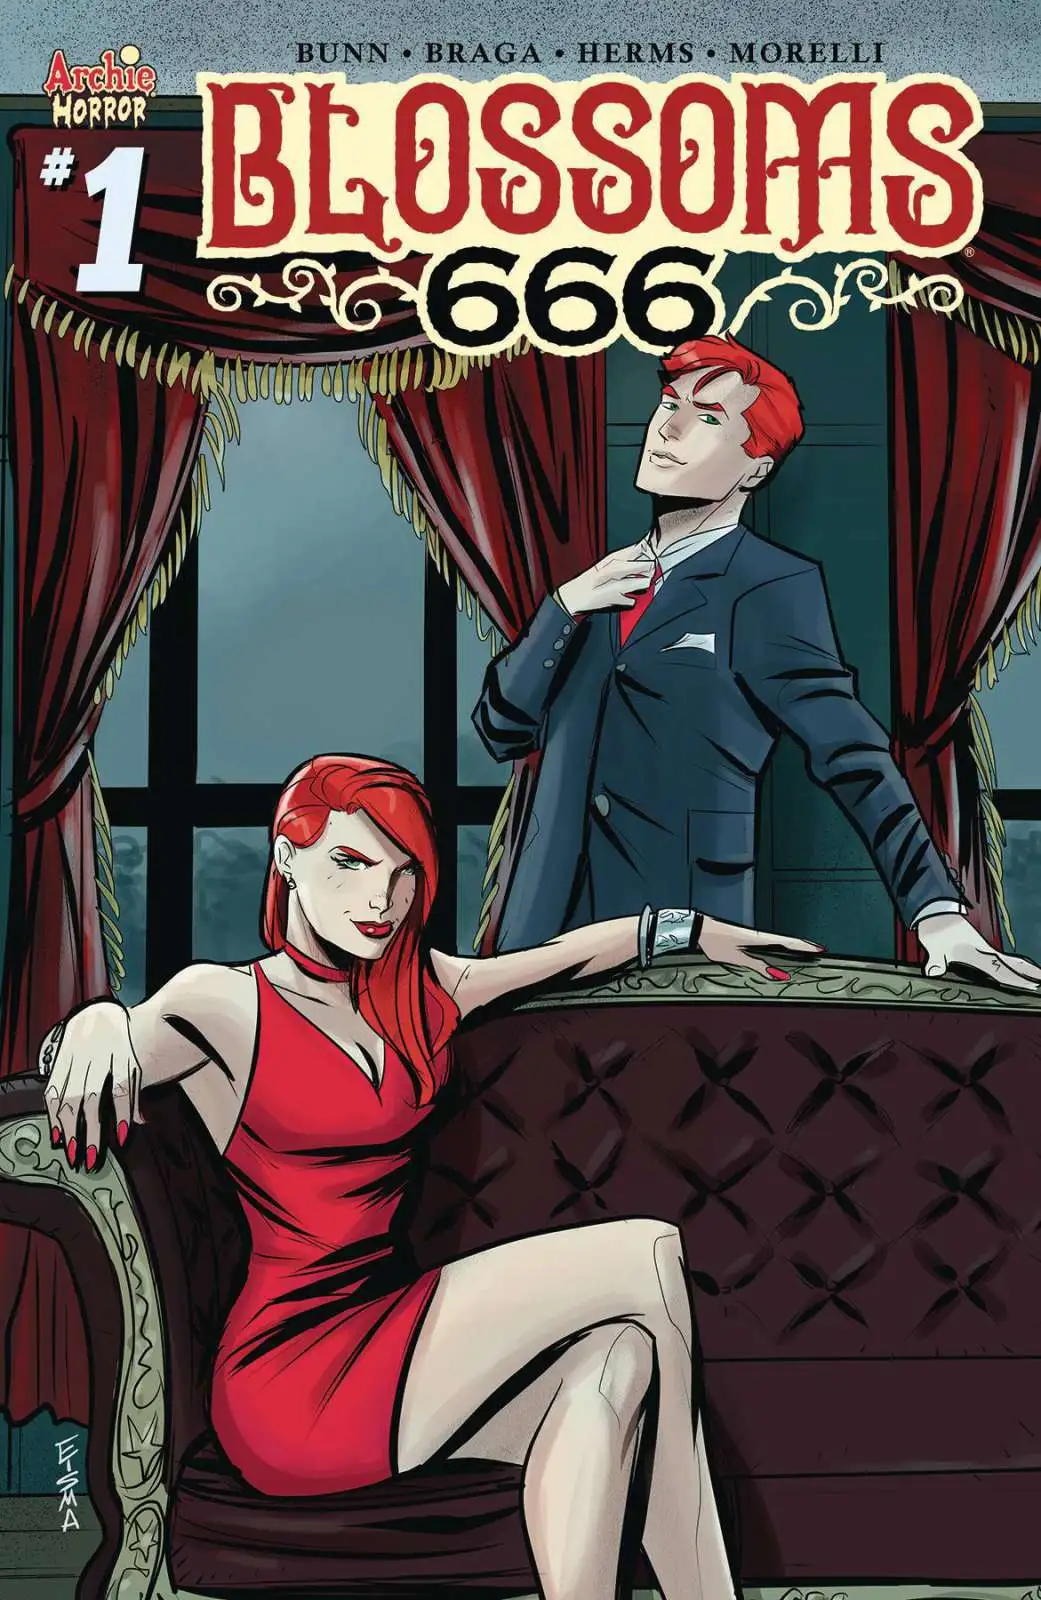 Archie Comic Publications Blossoms 666 #3 Comic Book Cover B 